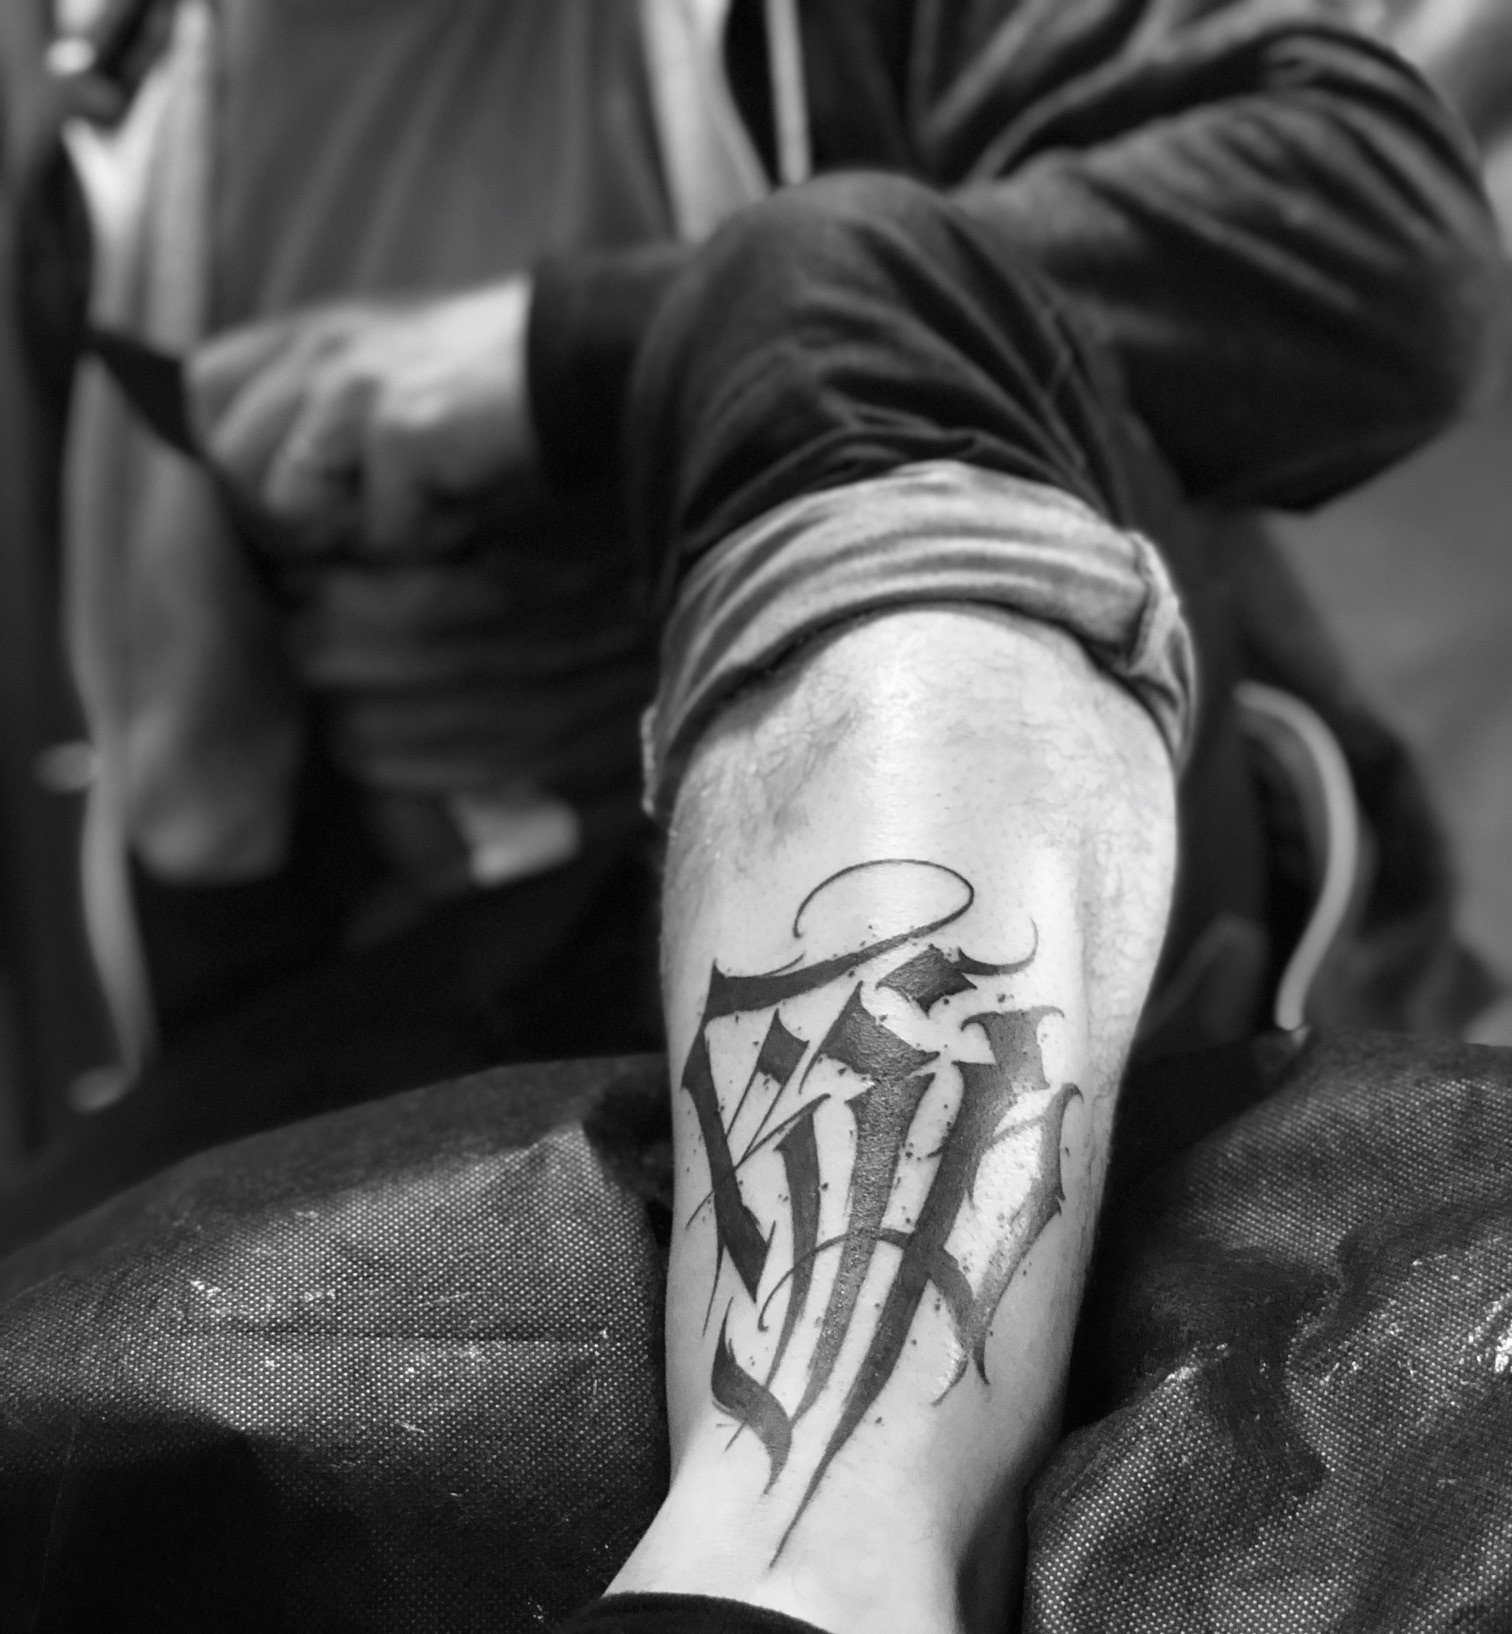 lower shin tattoo - lettering KJP done at Krakow dark times - 2019